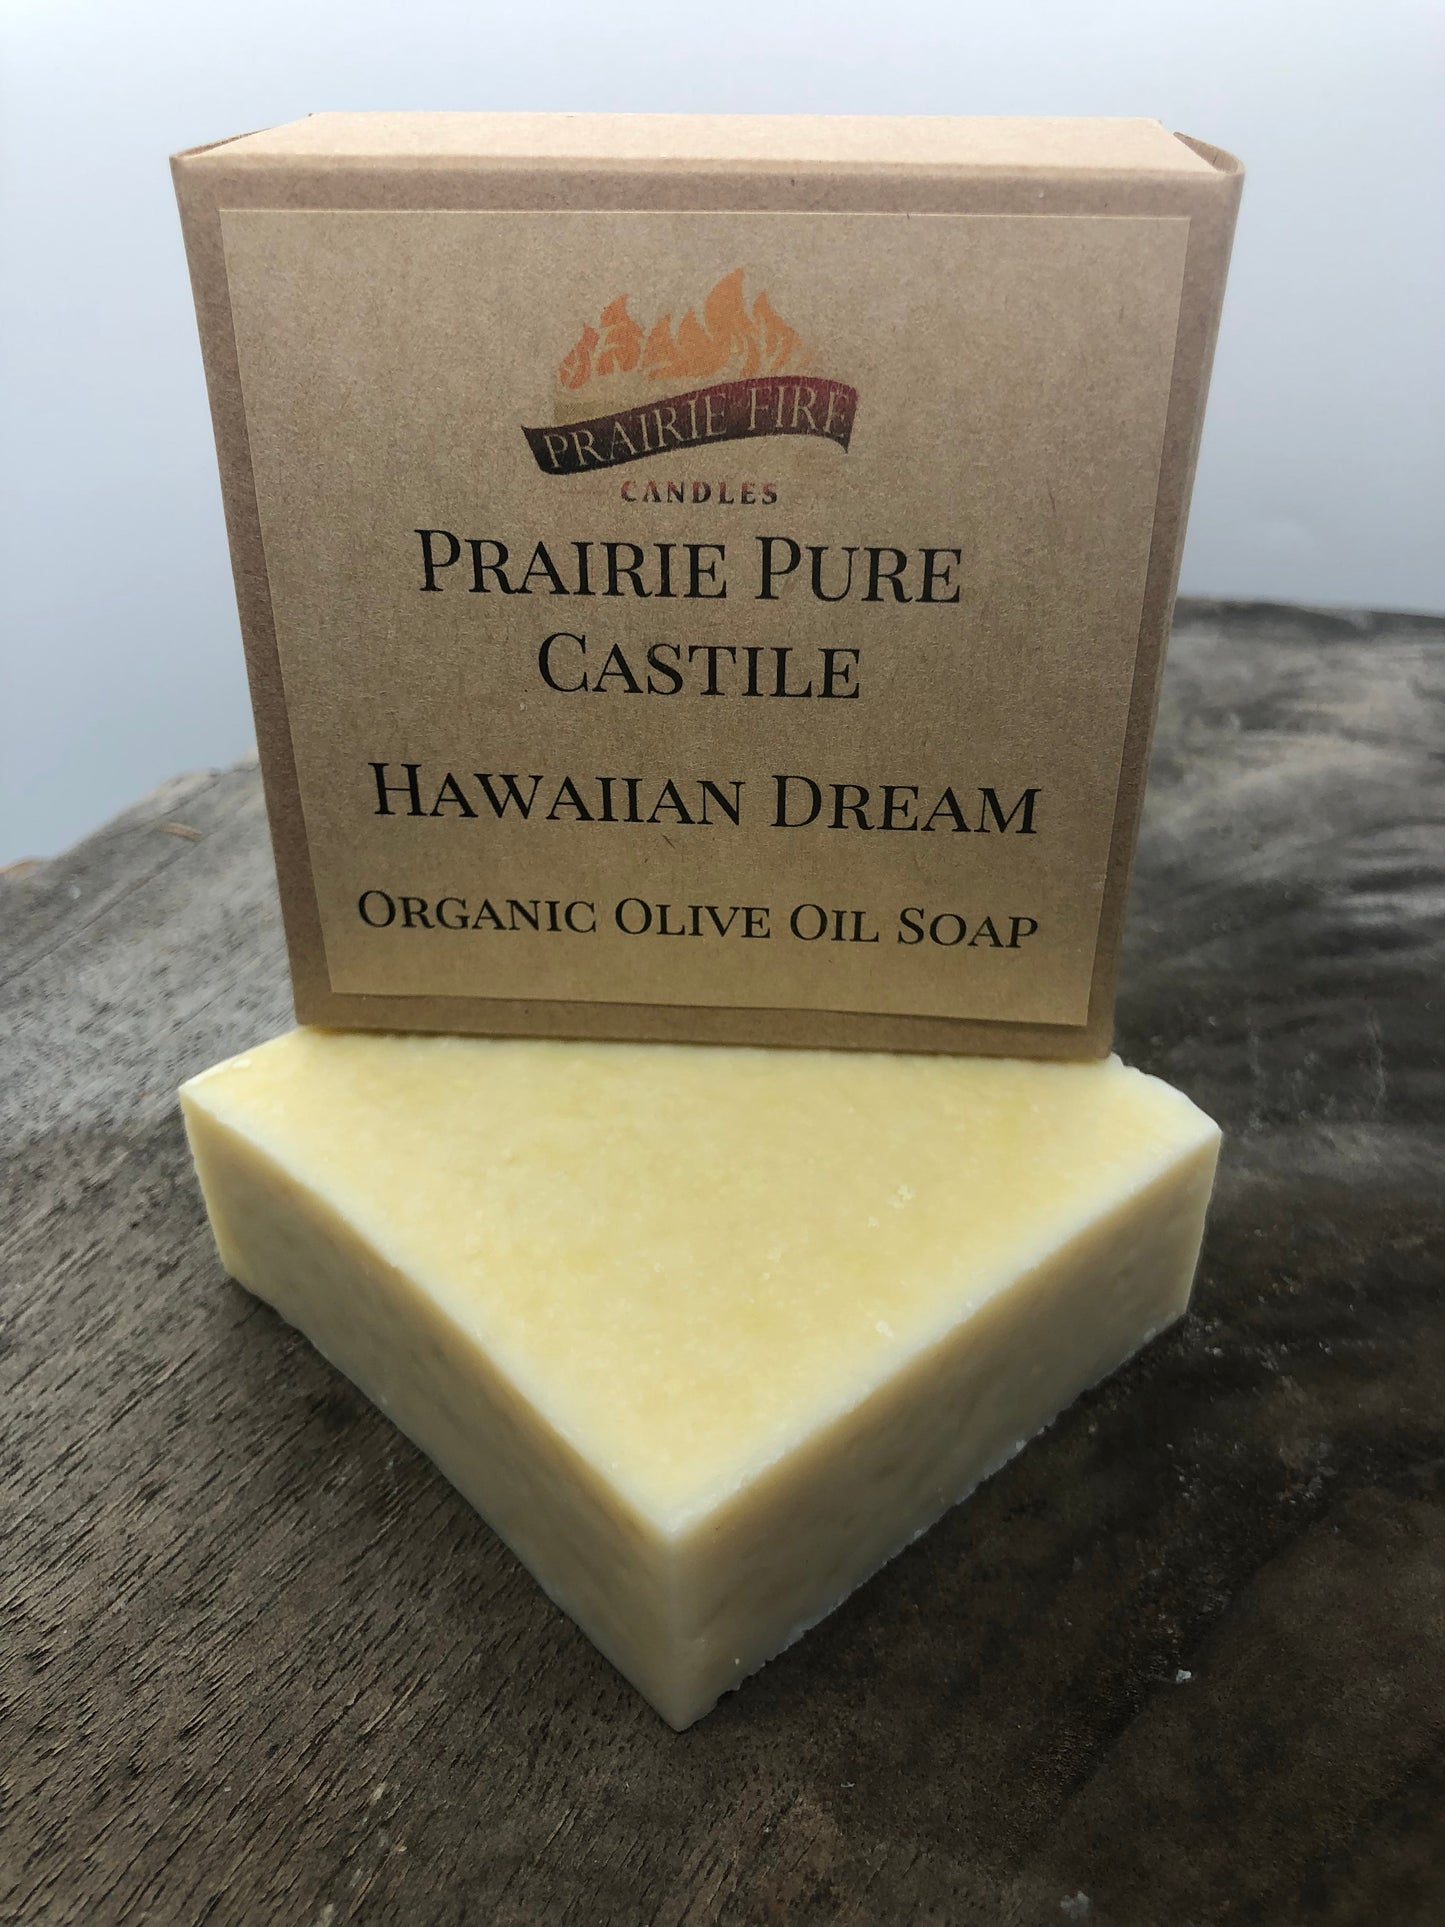 Hawaiian Dream Real Castile Organic Olive Oil Soap for Sensitive Skin - Dye Free - 100% Certified Organic Extra Virgin Olive Oil